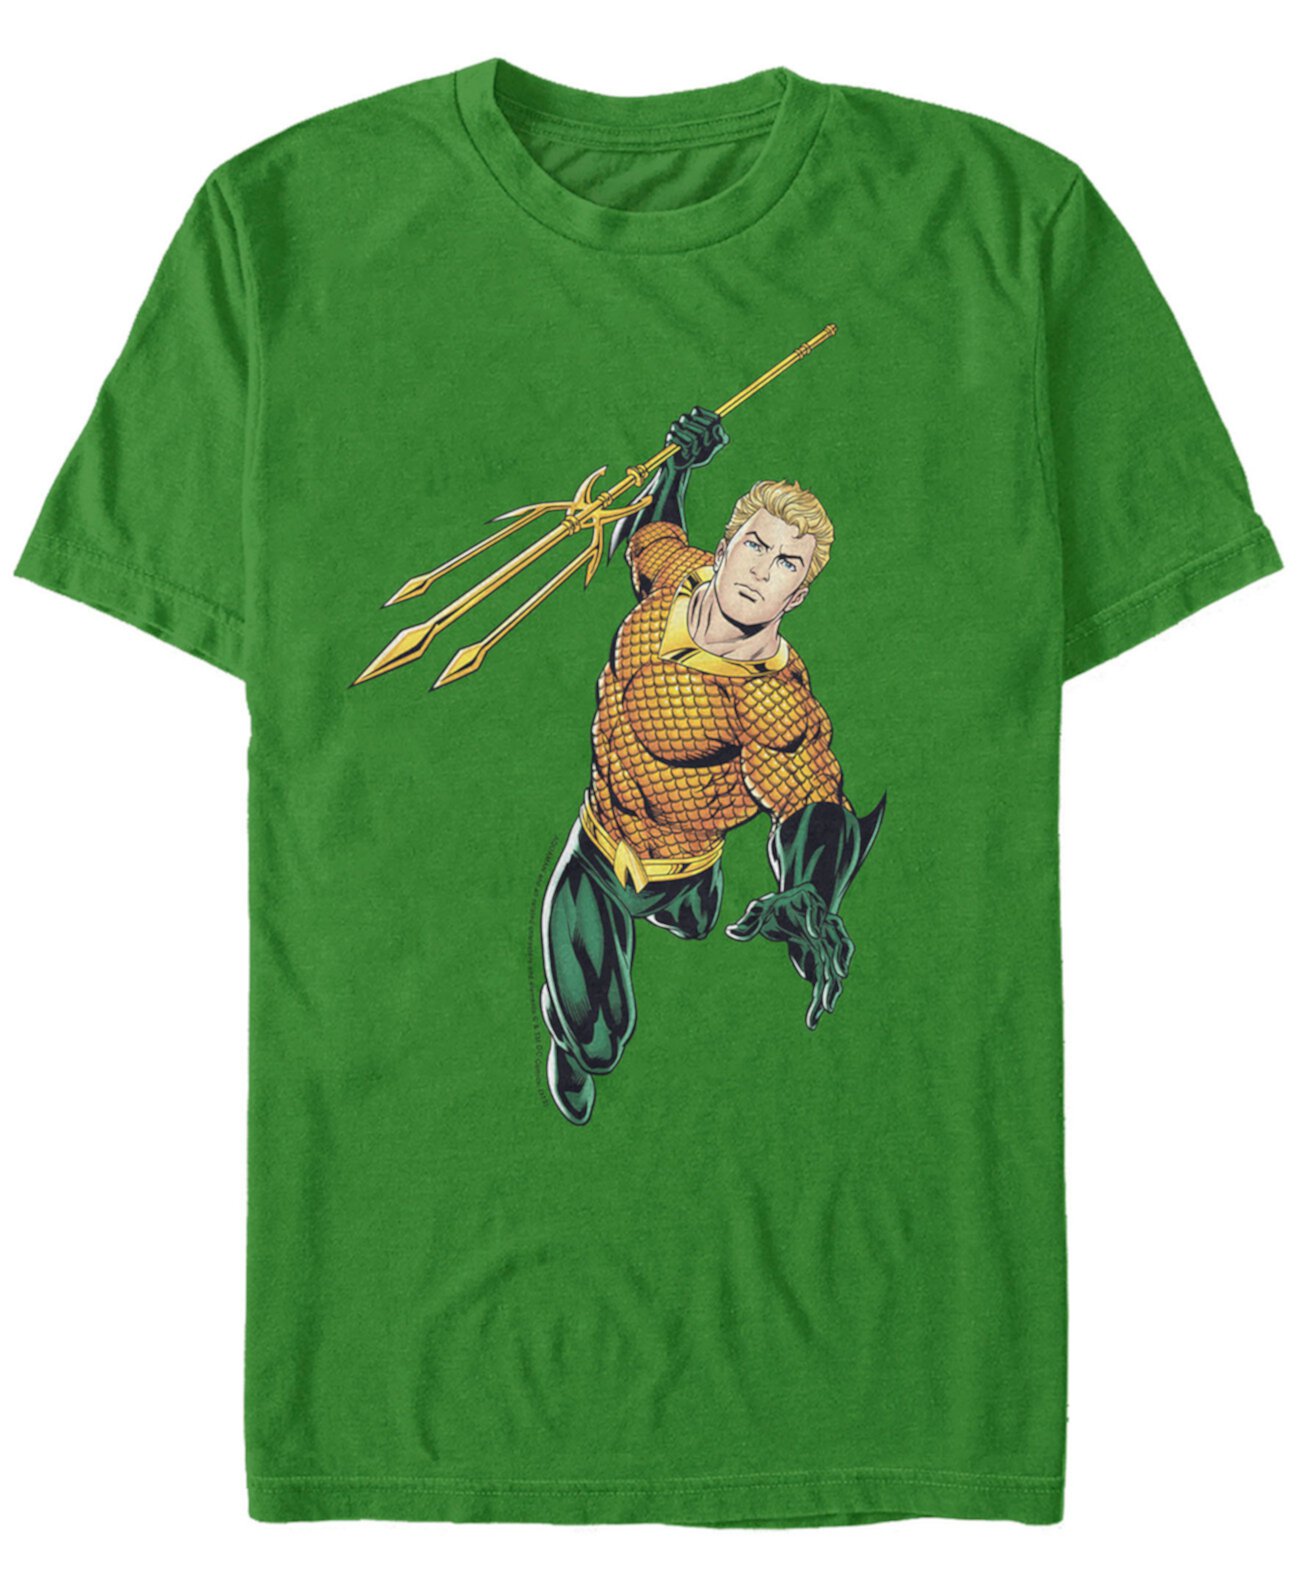 DC мужская футболка Aquaman Trident Action Pose с коротким рукавом FIFTH SUN